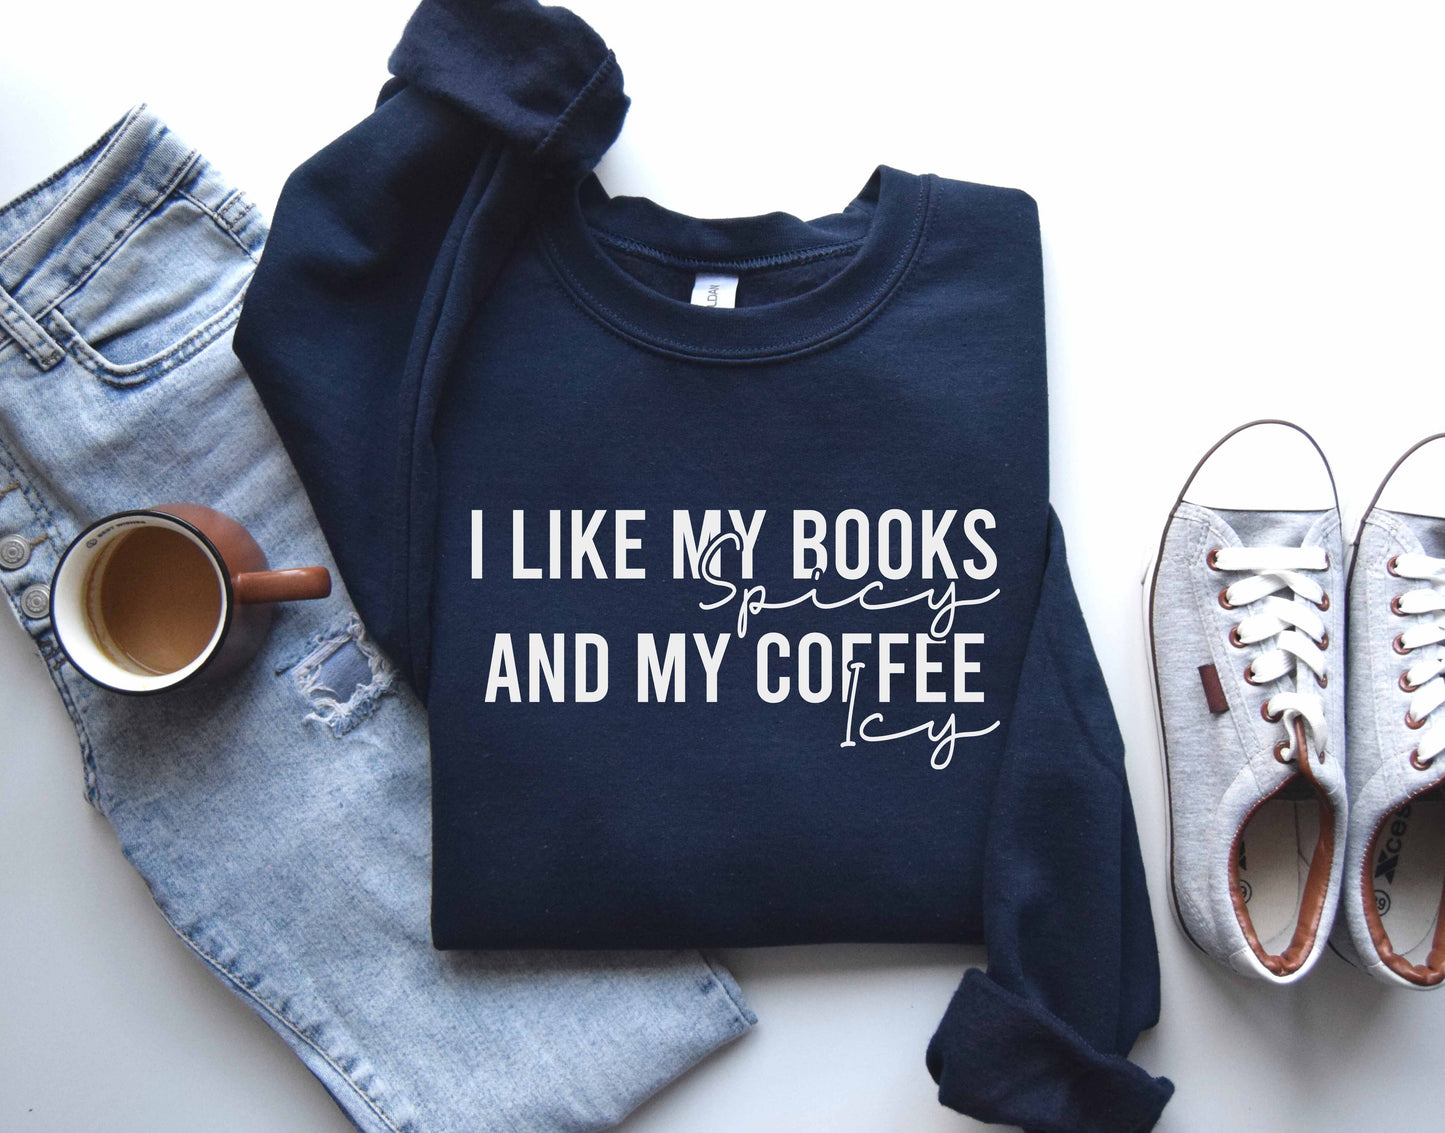 I Like My Books Spicy And My Coffee Icy Sweatshirt